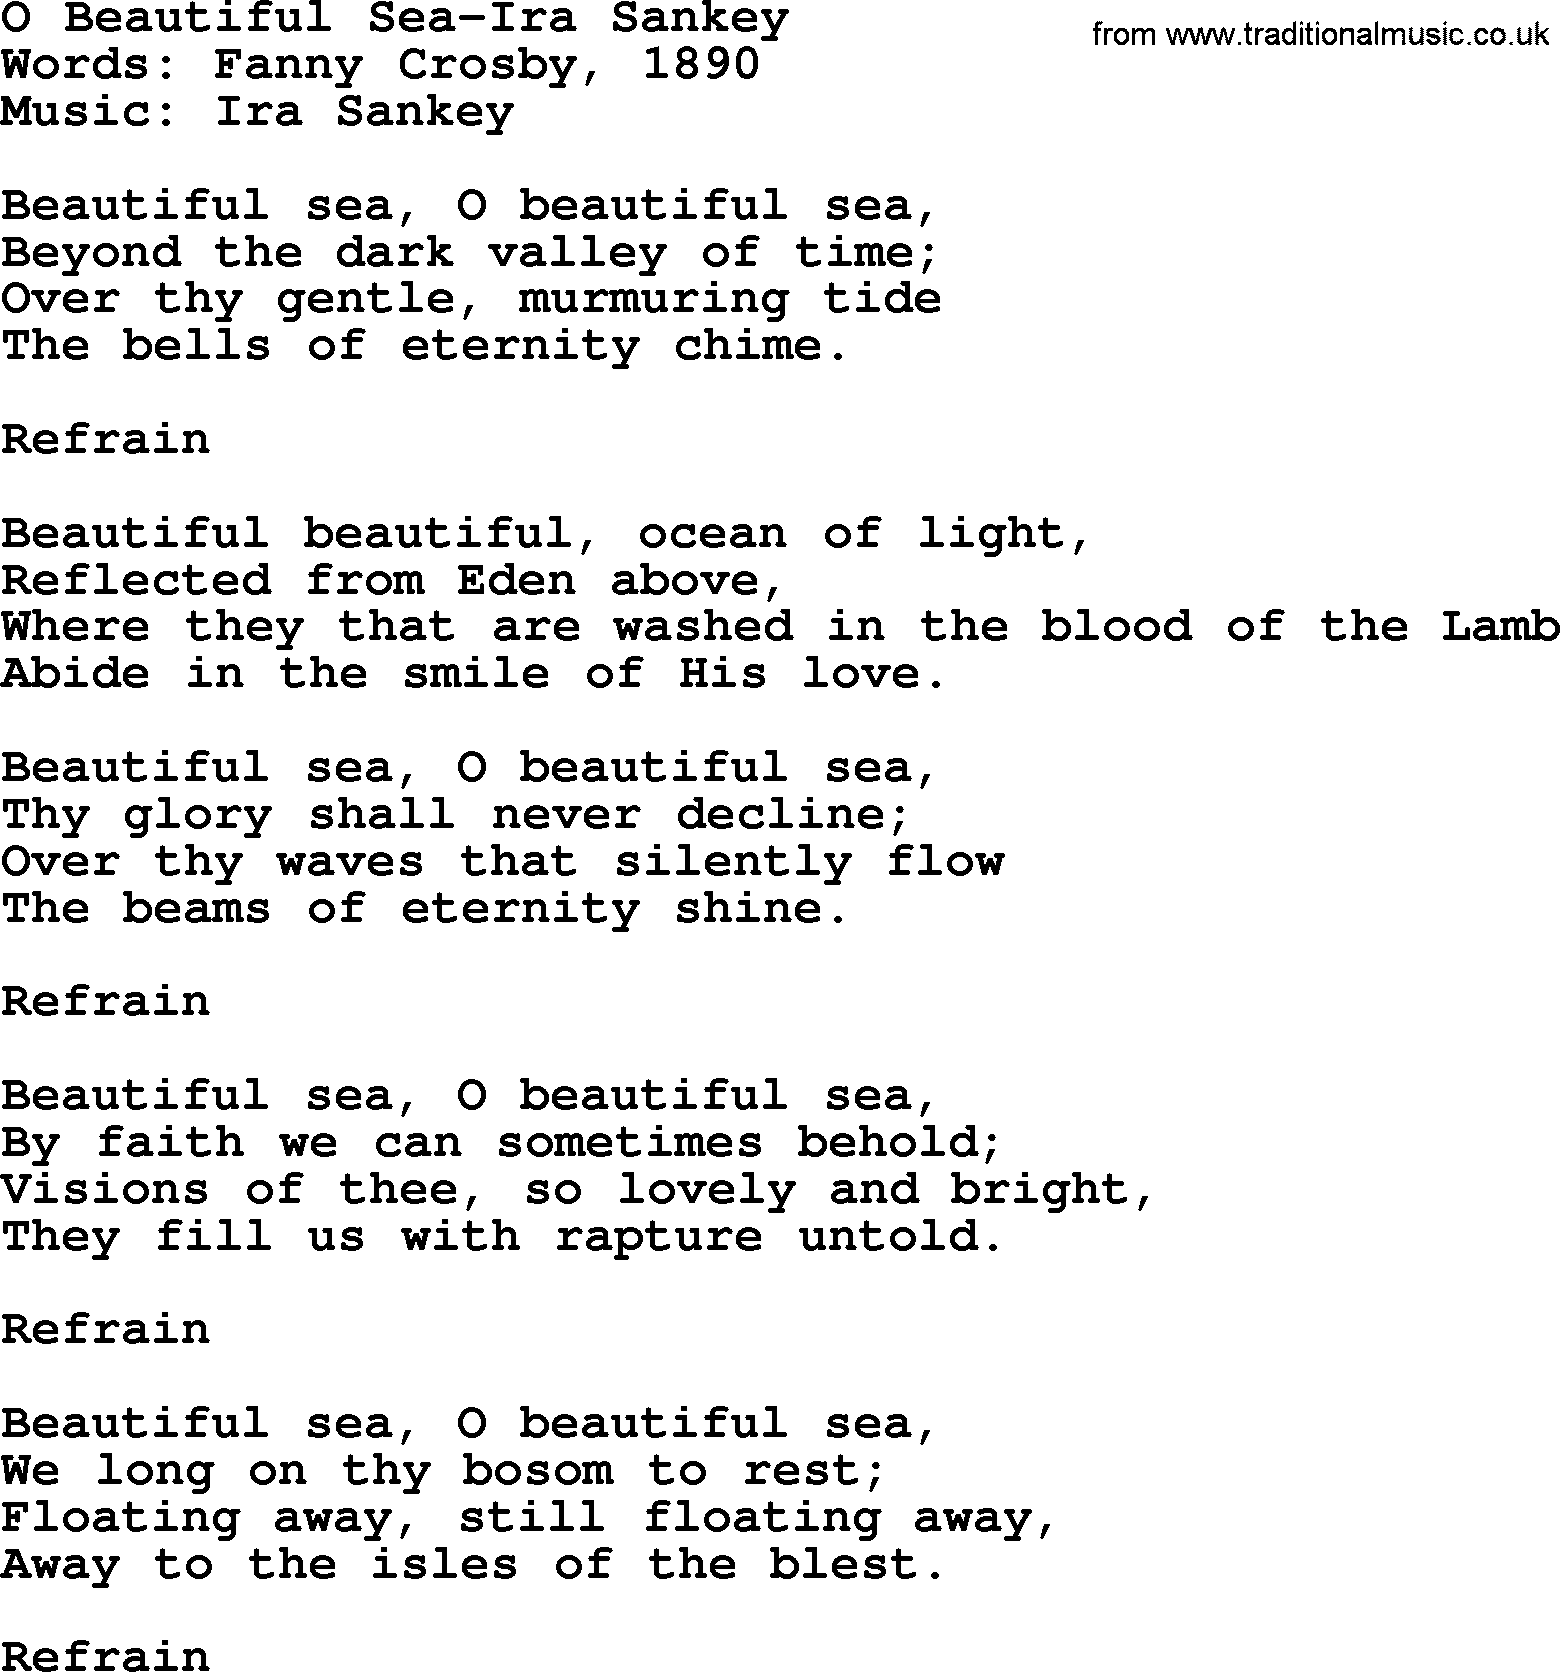 Ira Sankey hymn: O Beautiful Sea-Ira Sankey, lyrics